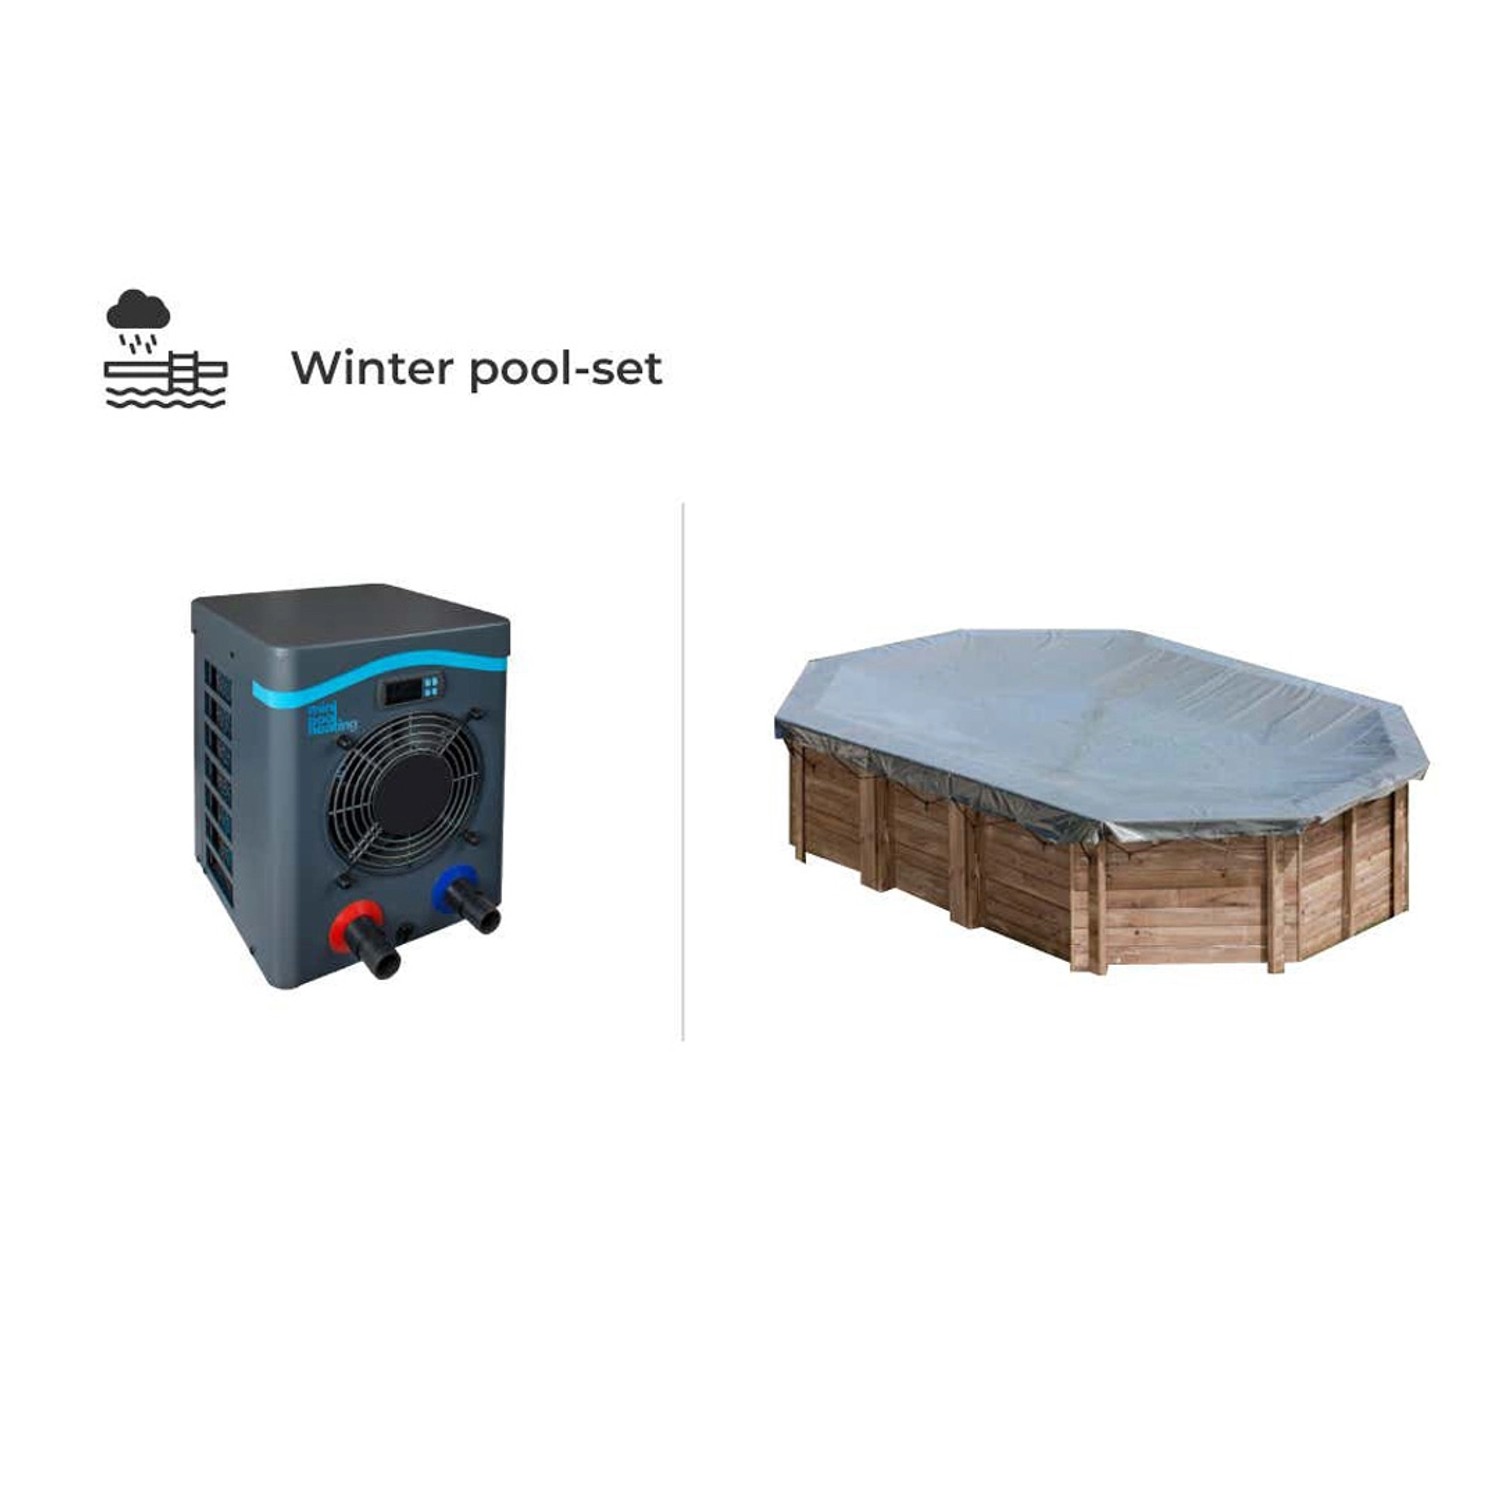 Poolcrew Winter-Pool-Set Ameland Wärmepumpe mit Abdeckplane von Poolcrew